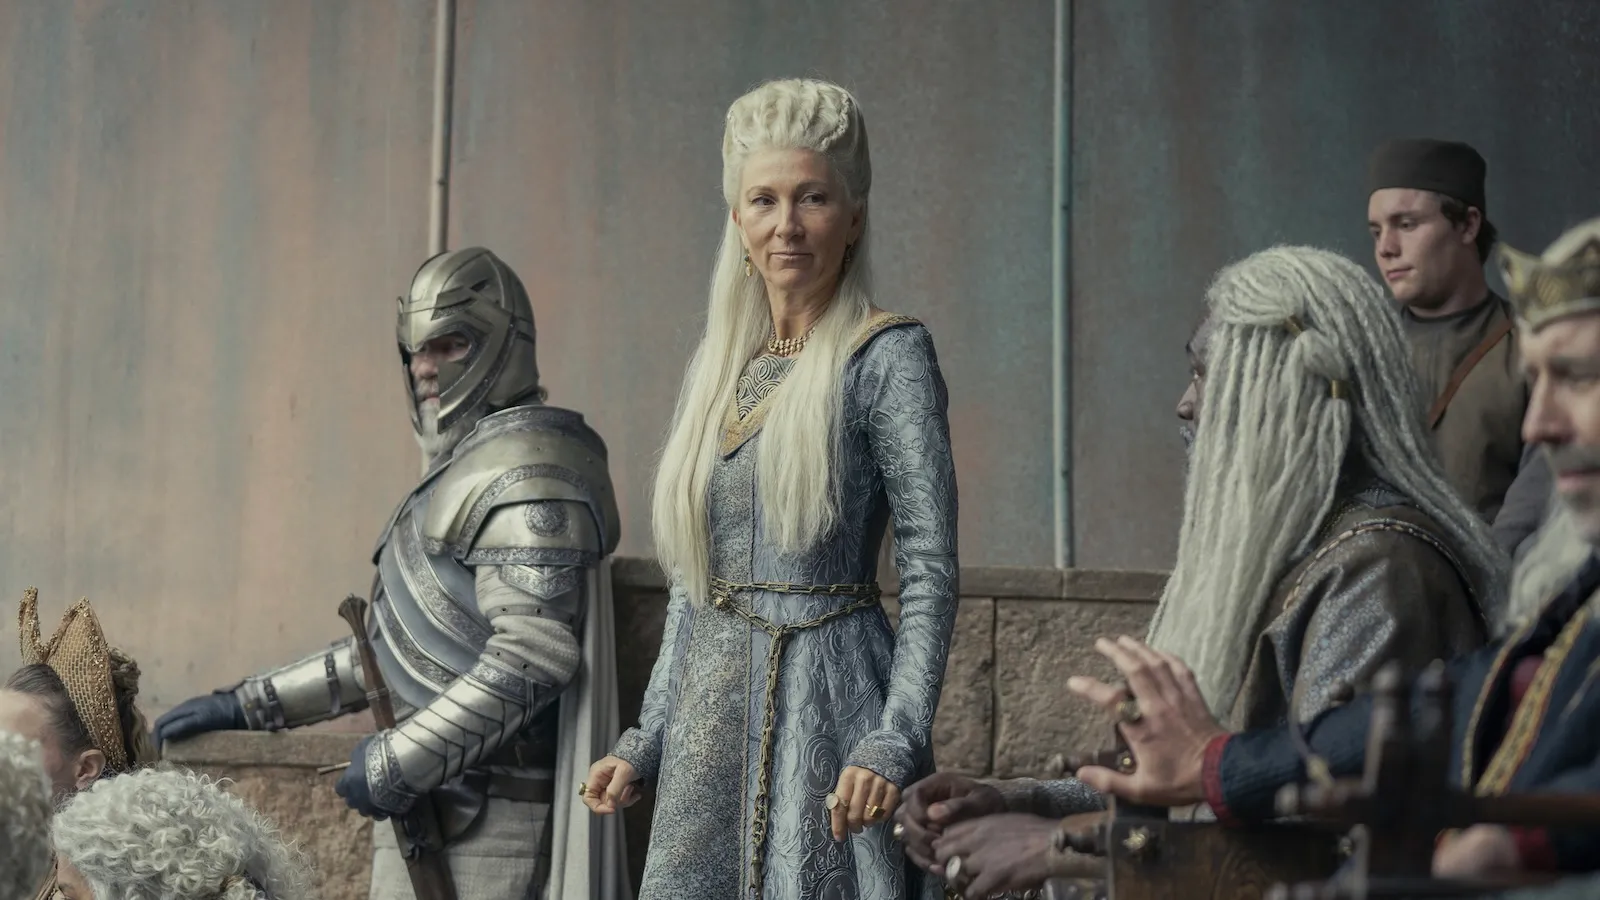 Eve Best as Princess Rhaenys Targaryen in House of the Dragon